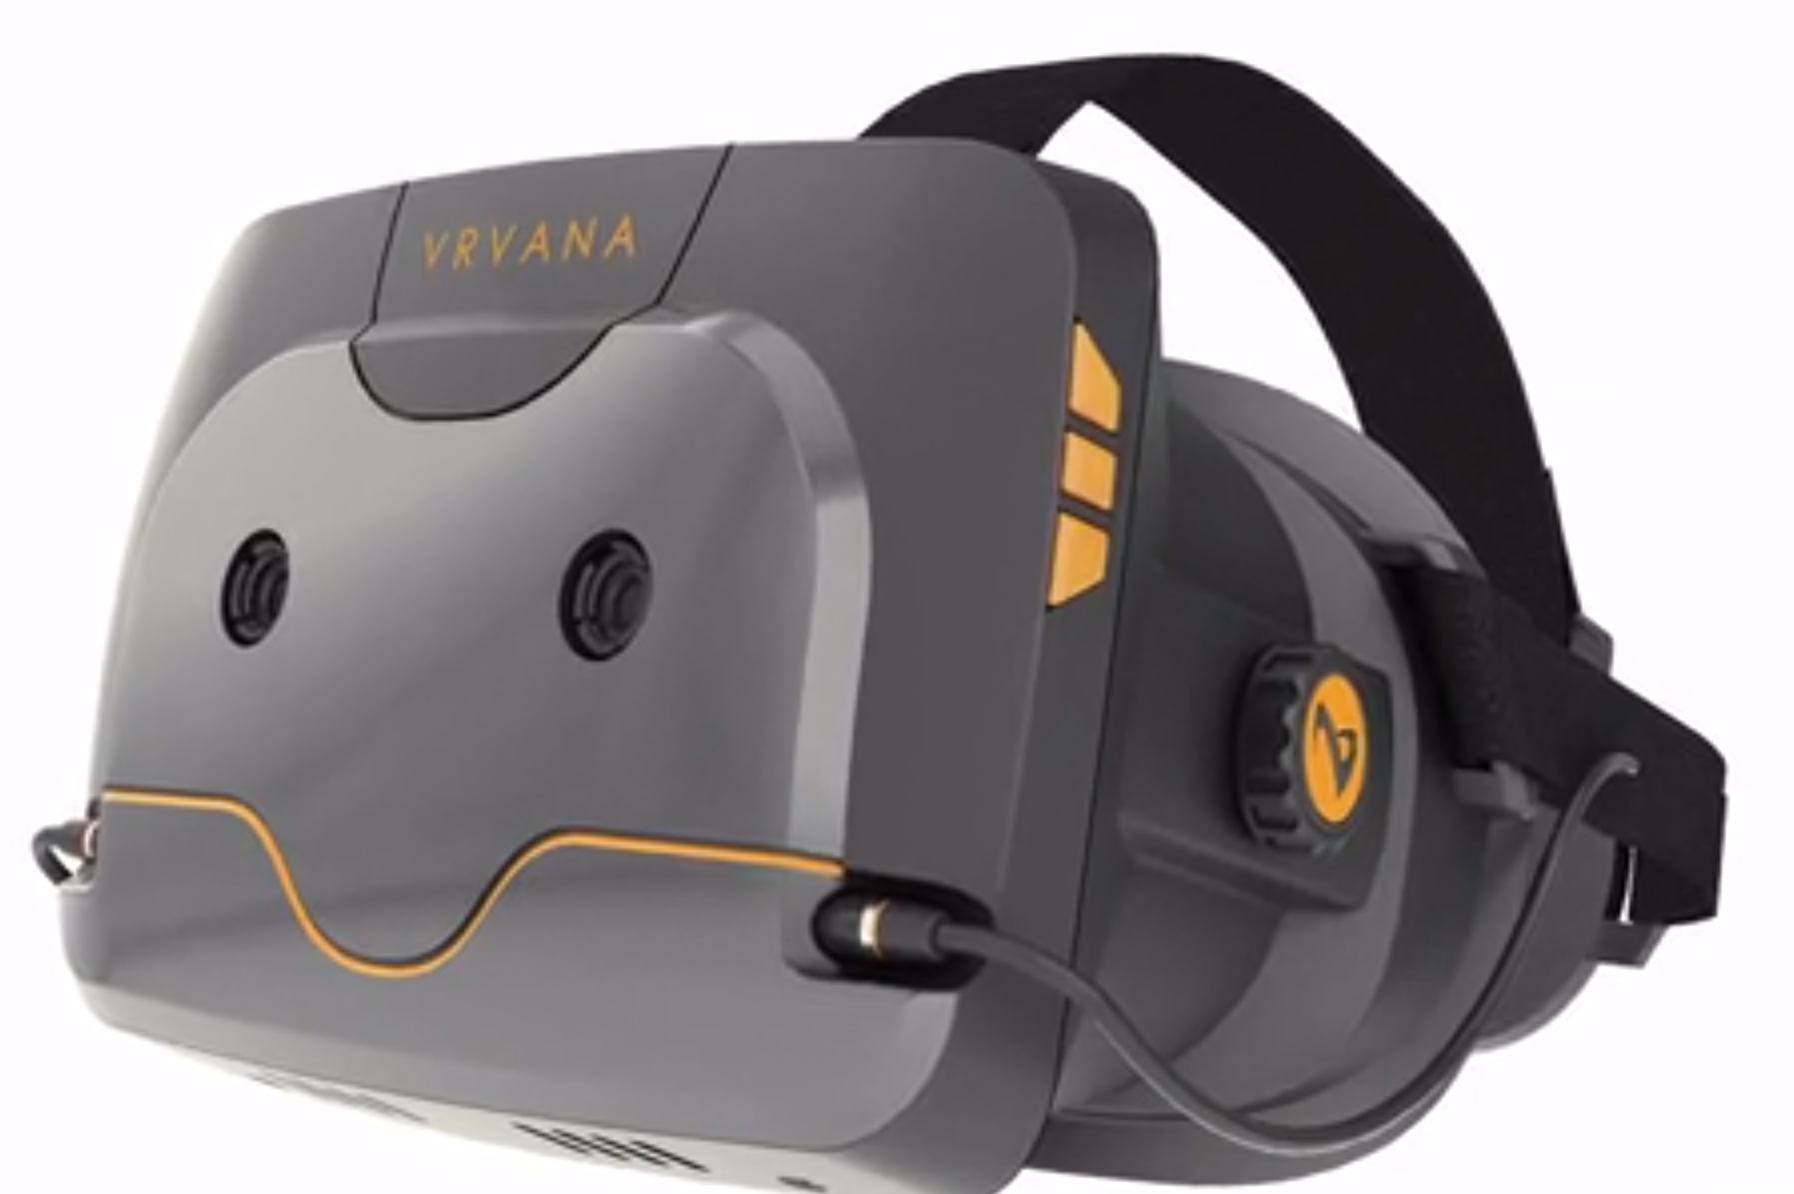 VR Vana Totem Virtual Reality Headset